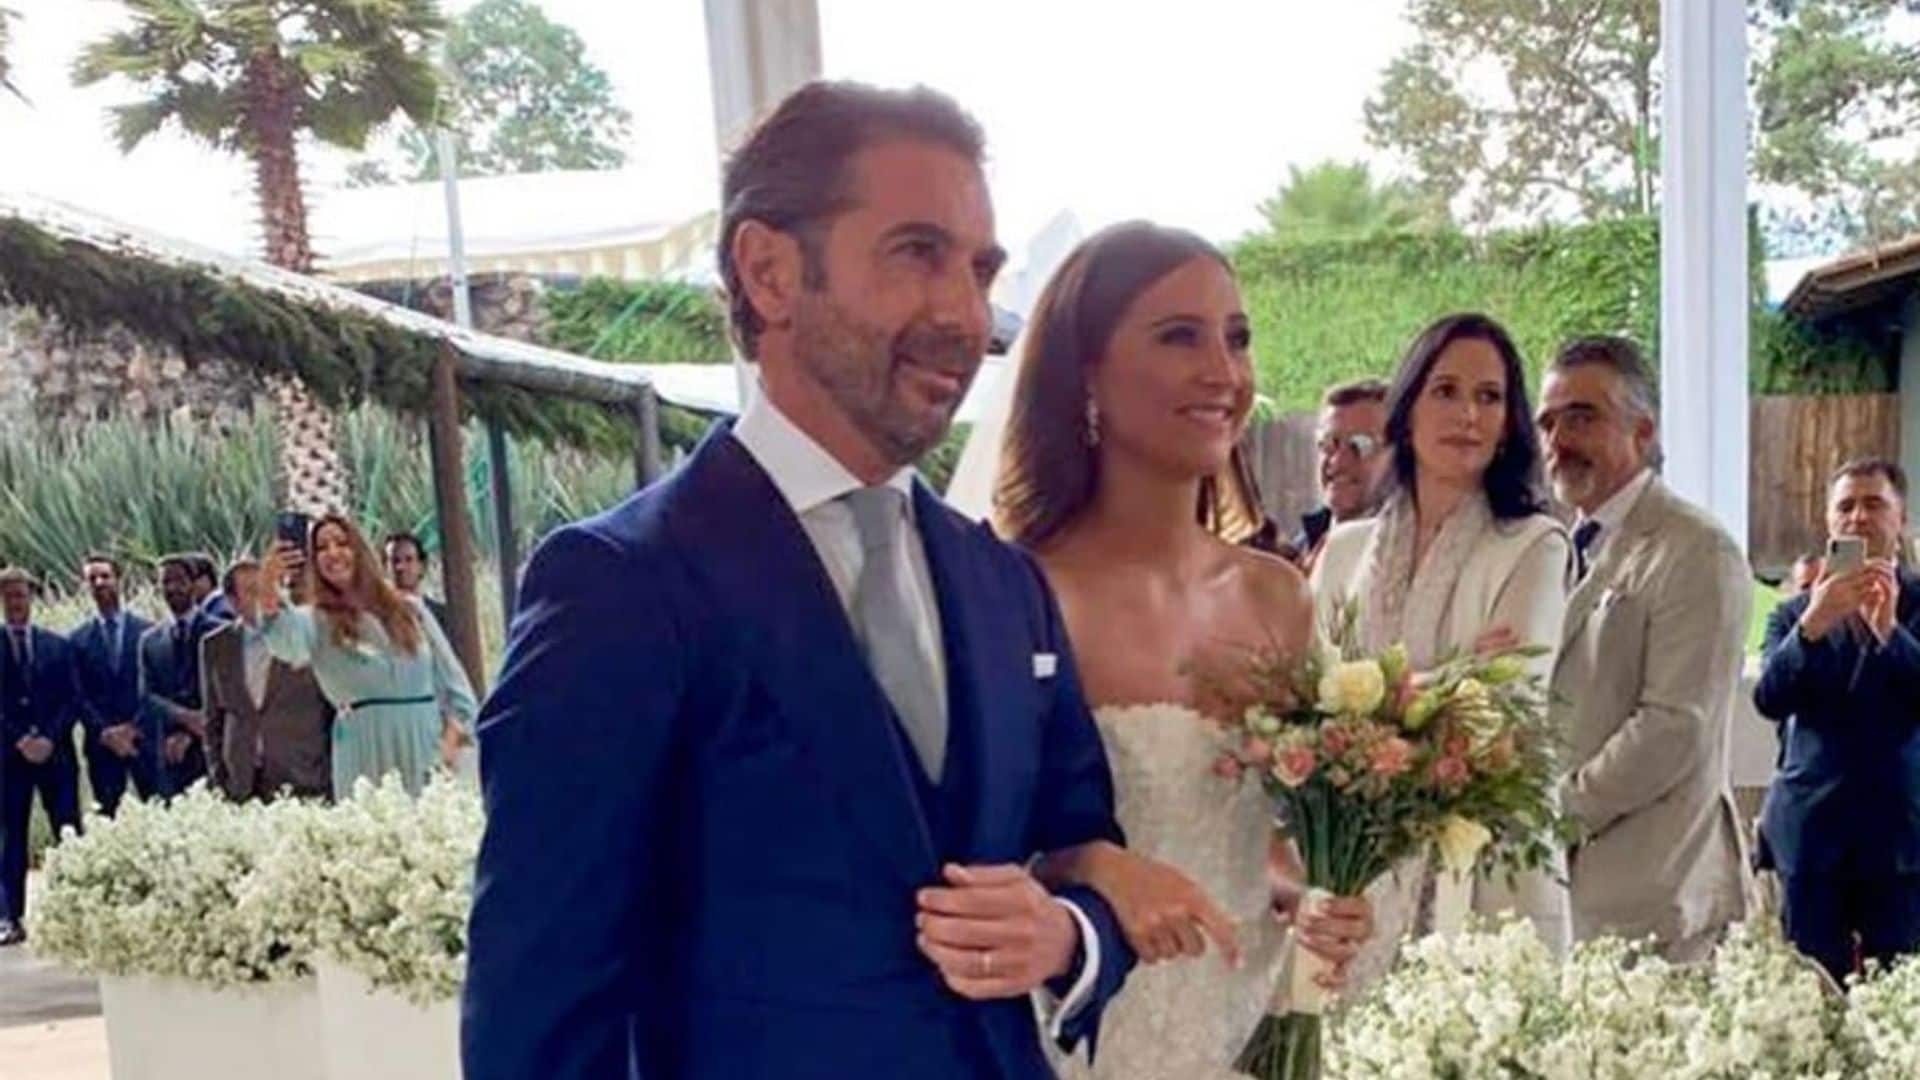 Pepe Baston celebrates his daughter's wedding accompanied by his wife, Eva Longoria